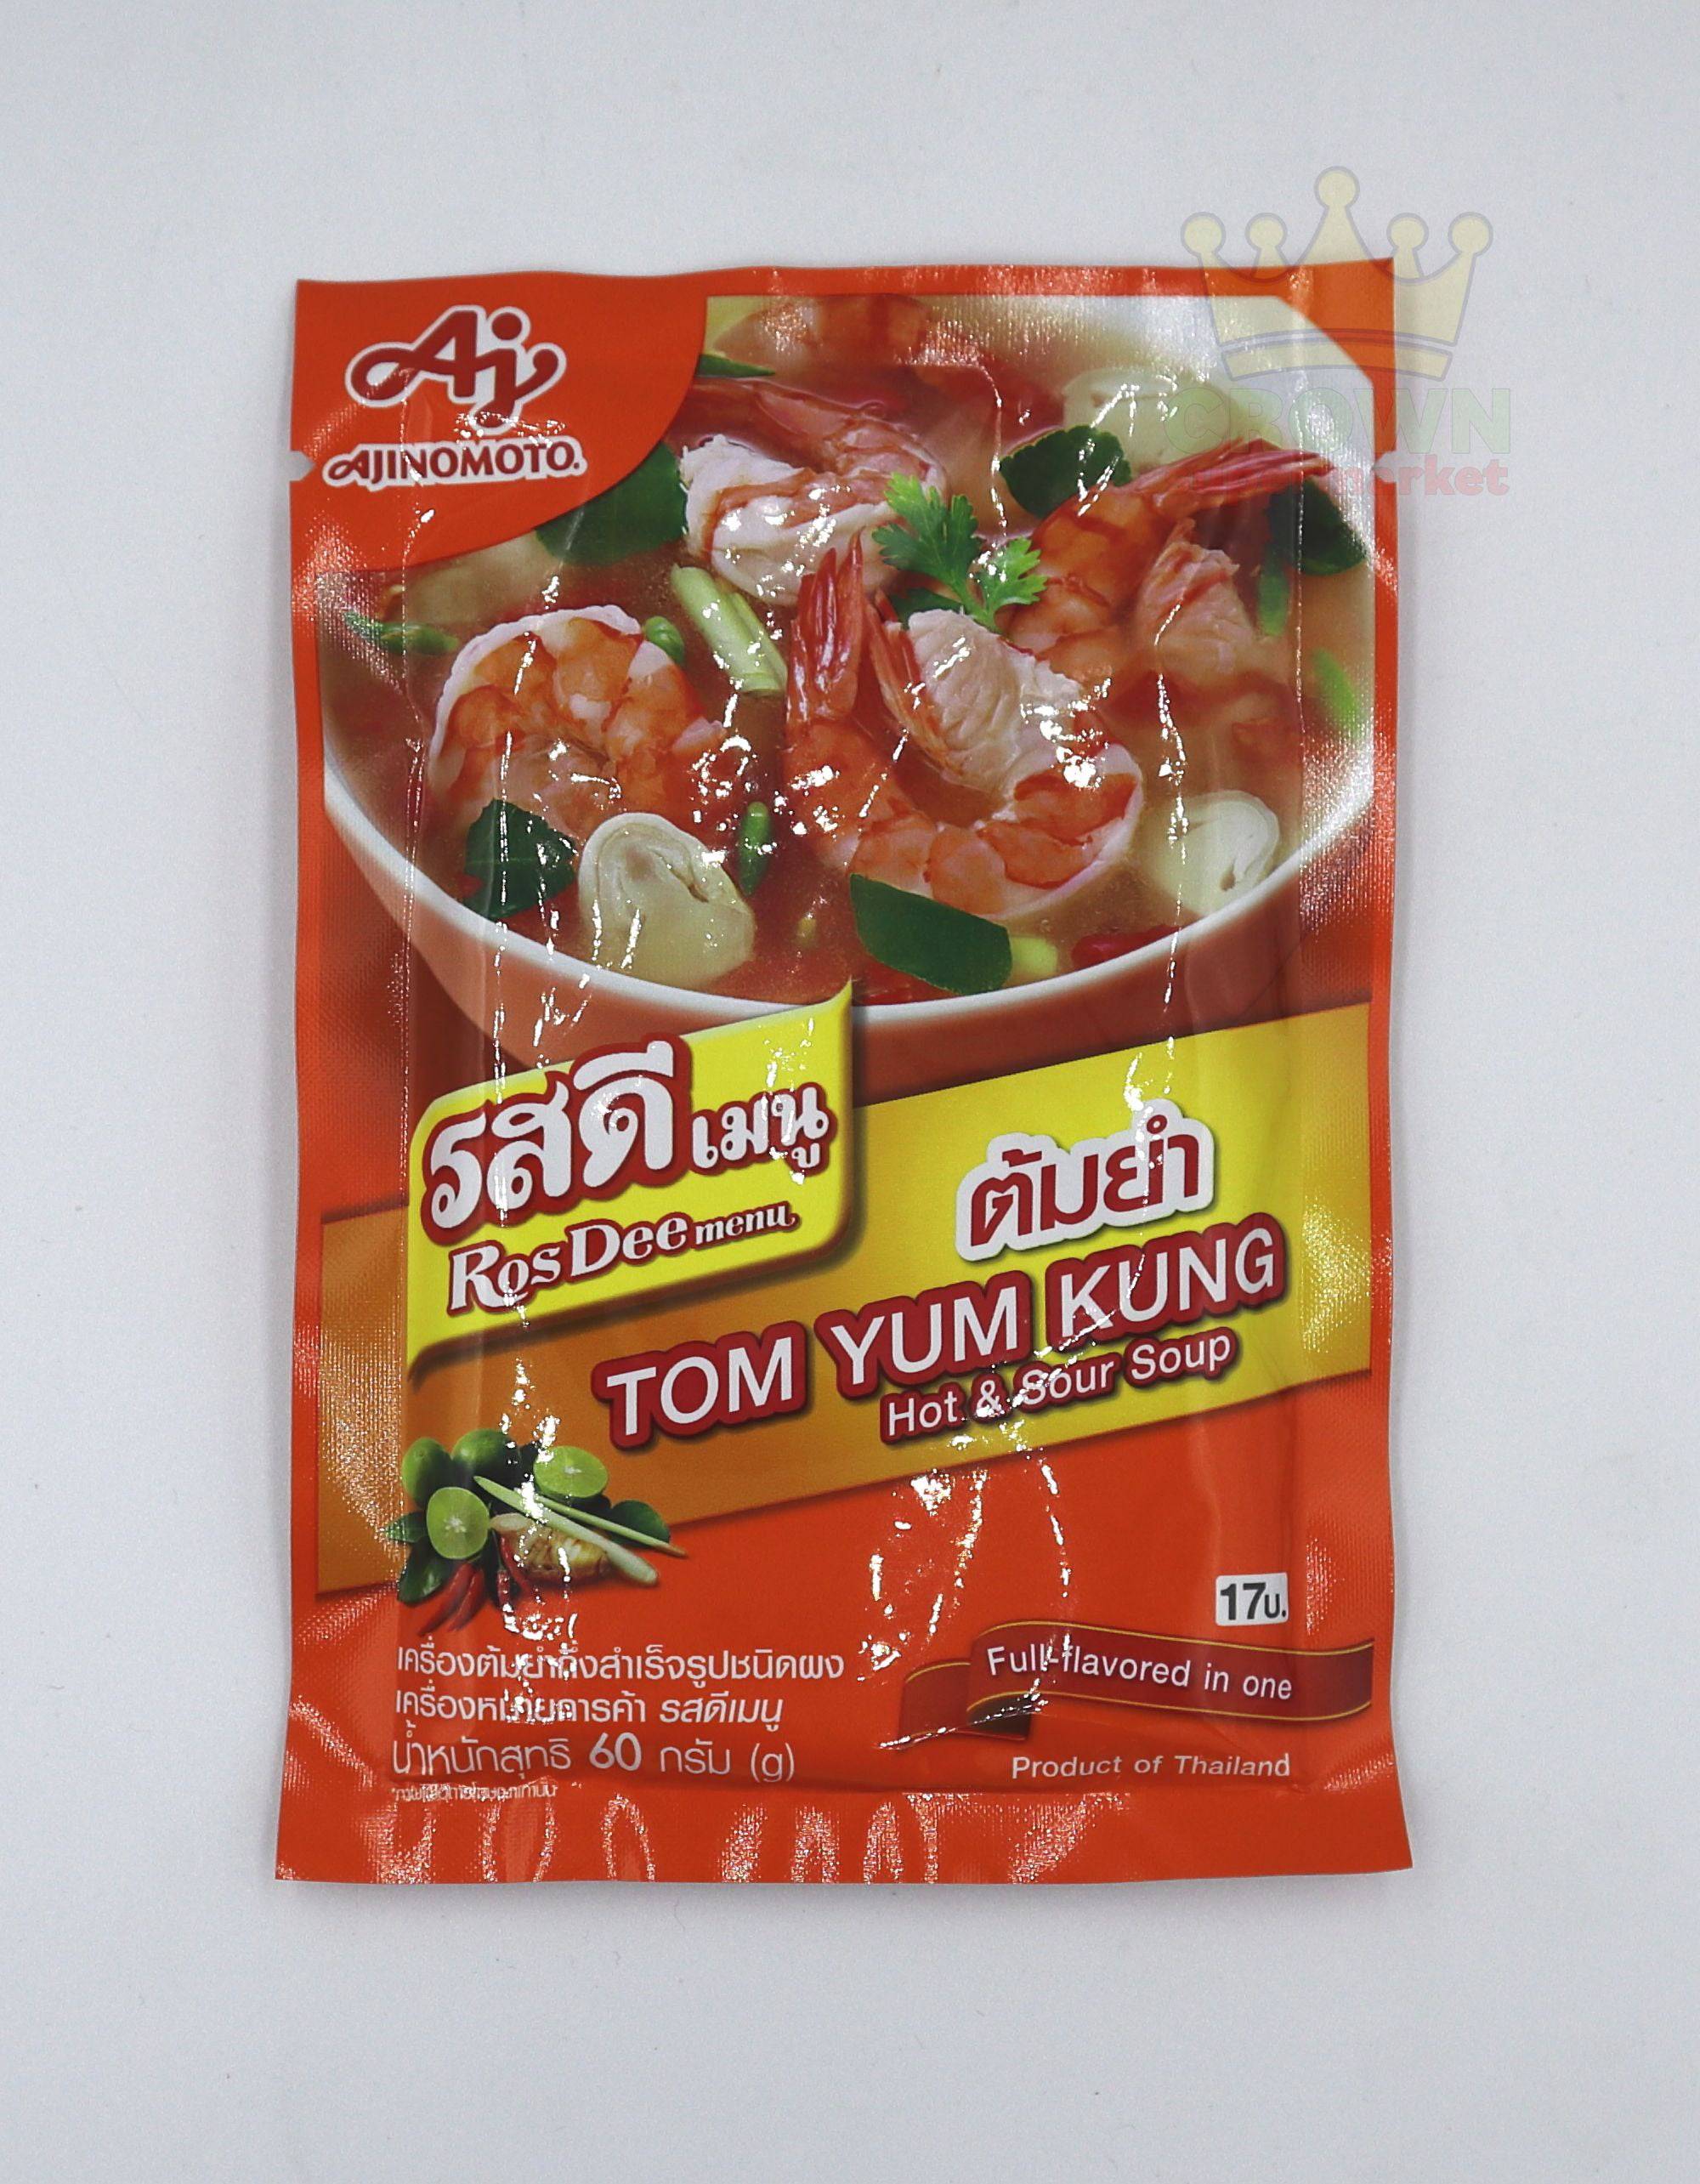 Ajinomoto  Thai Spicy Seafood Yum Yum® Instant Noodles - Ajinomoto